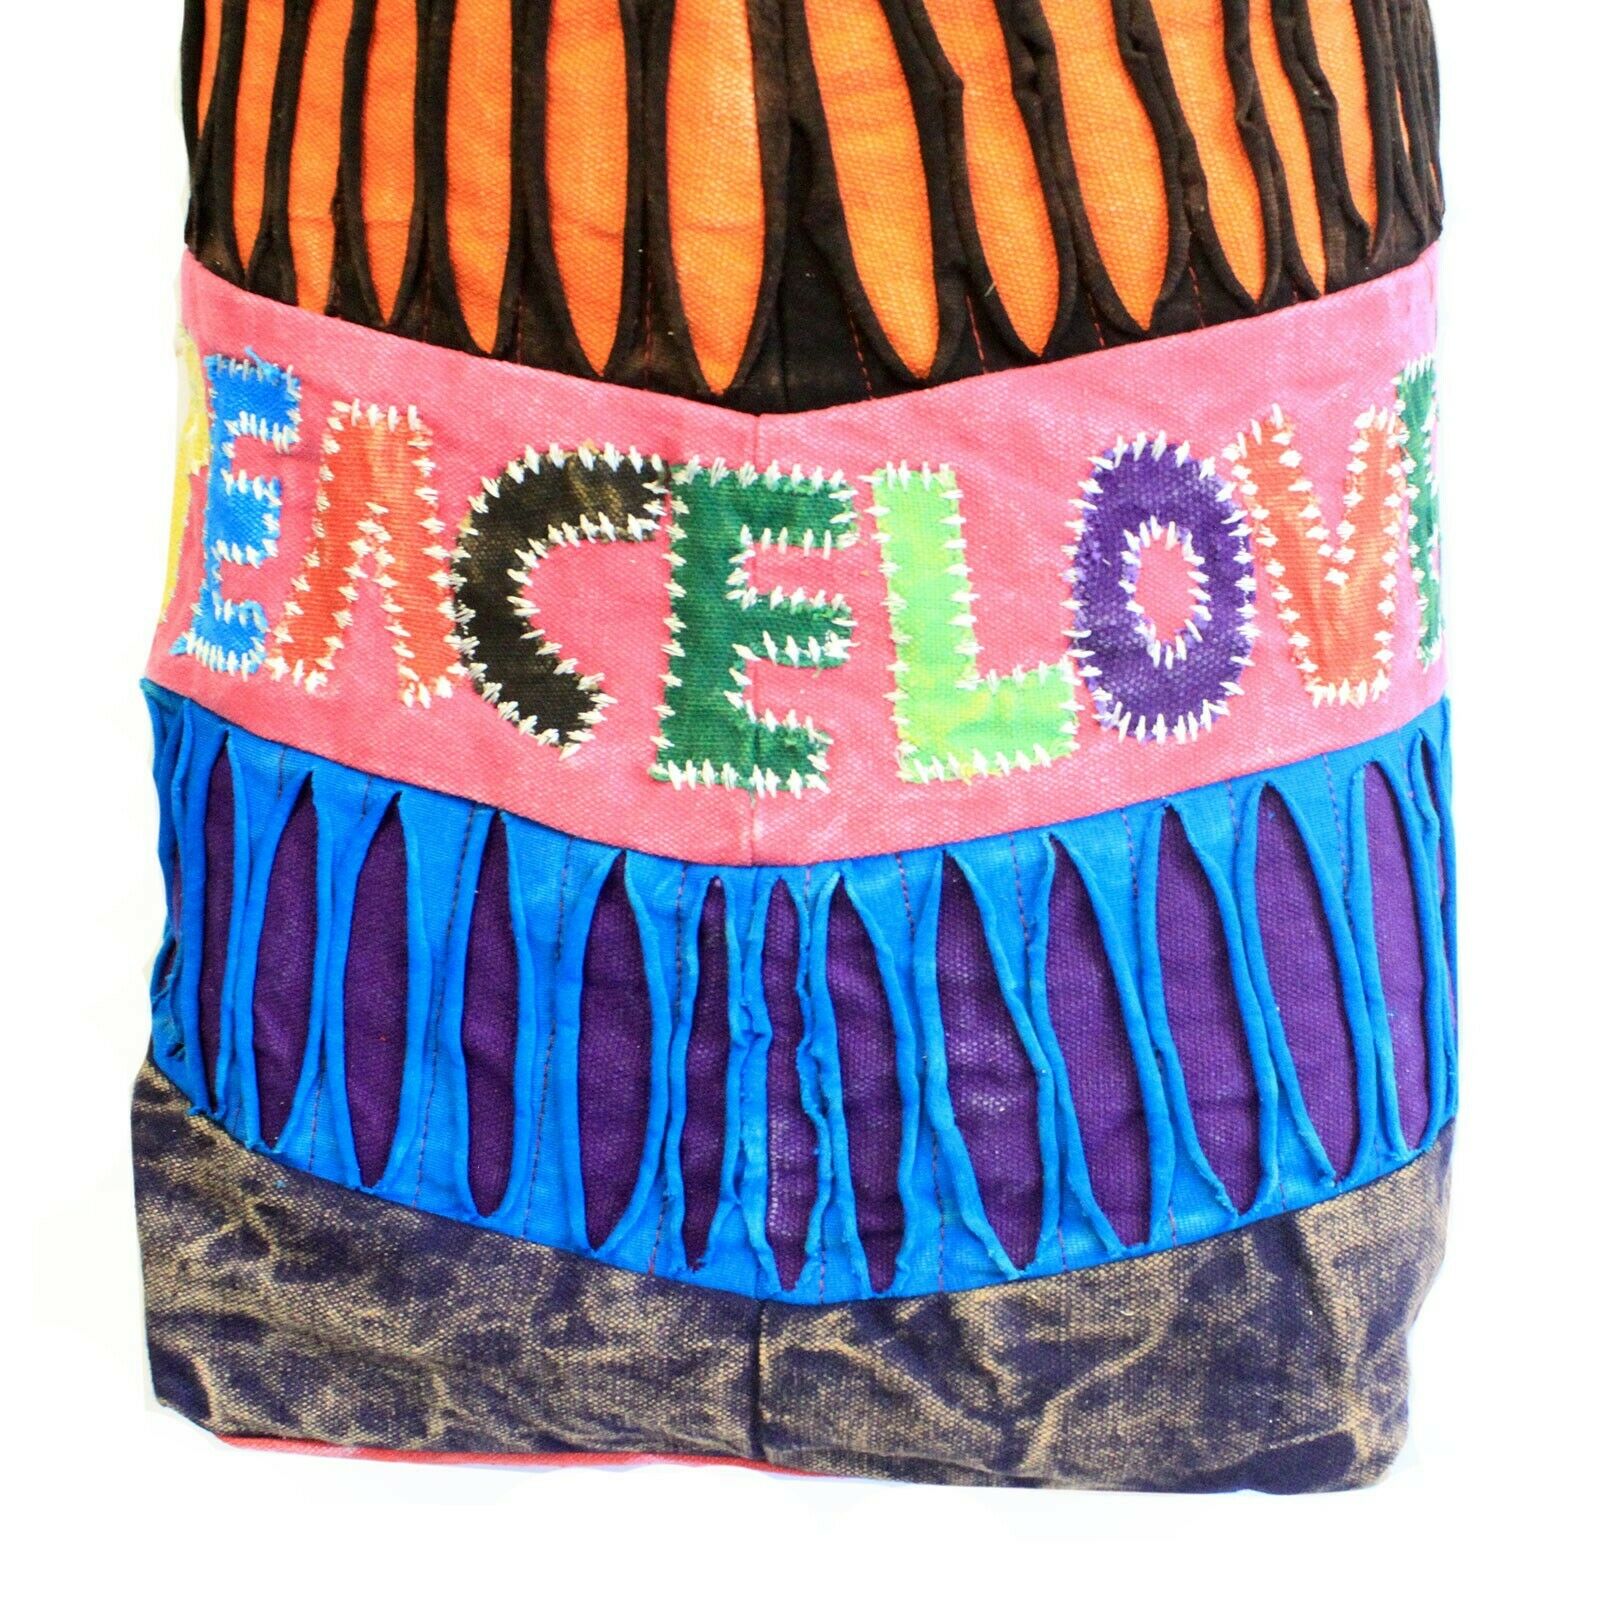 NEW bOHO/FESTI/HIPPY Patchwork Bags-PEACE LOVE shoulder bag/sling bag 34 X 36CM. New